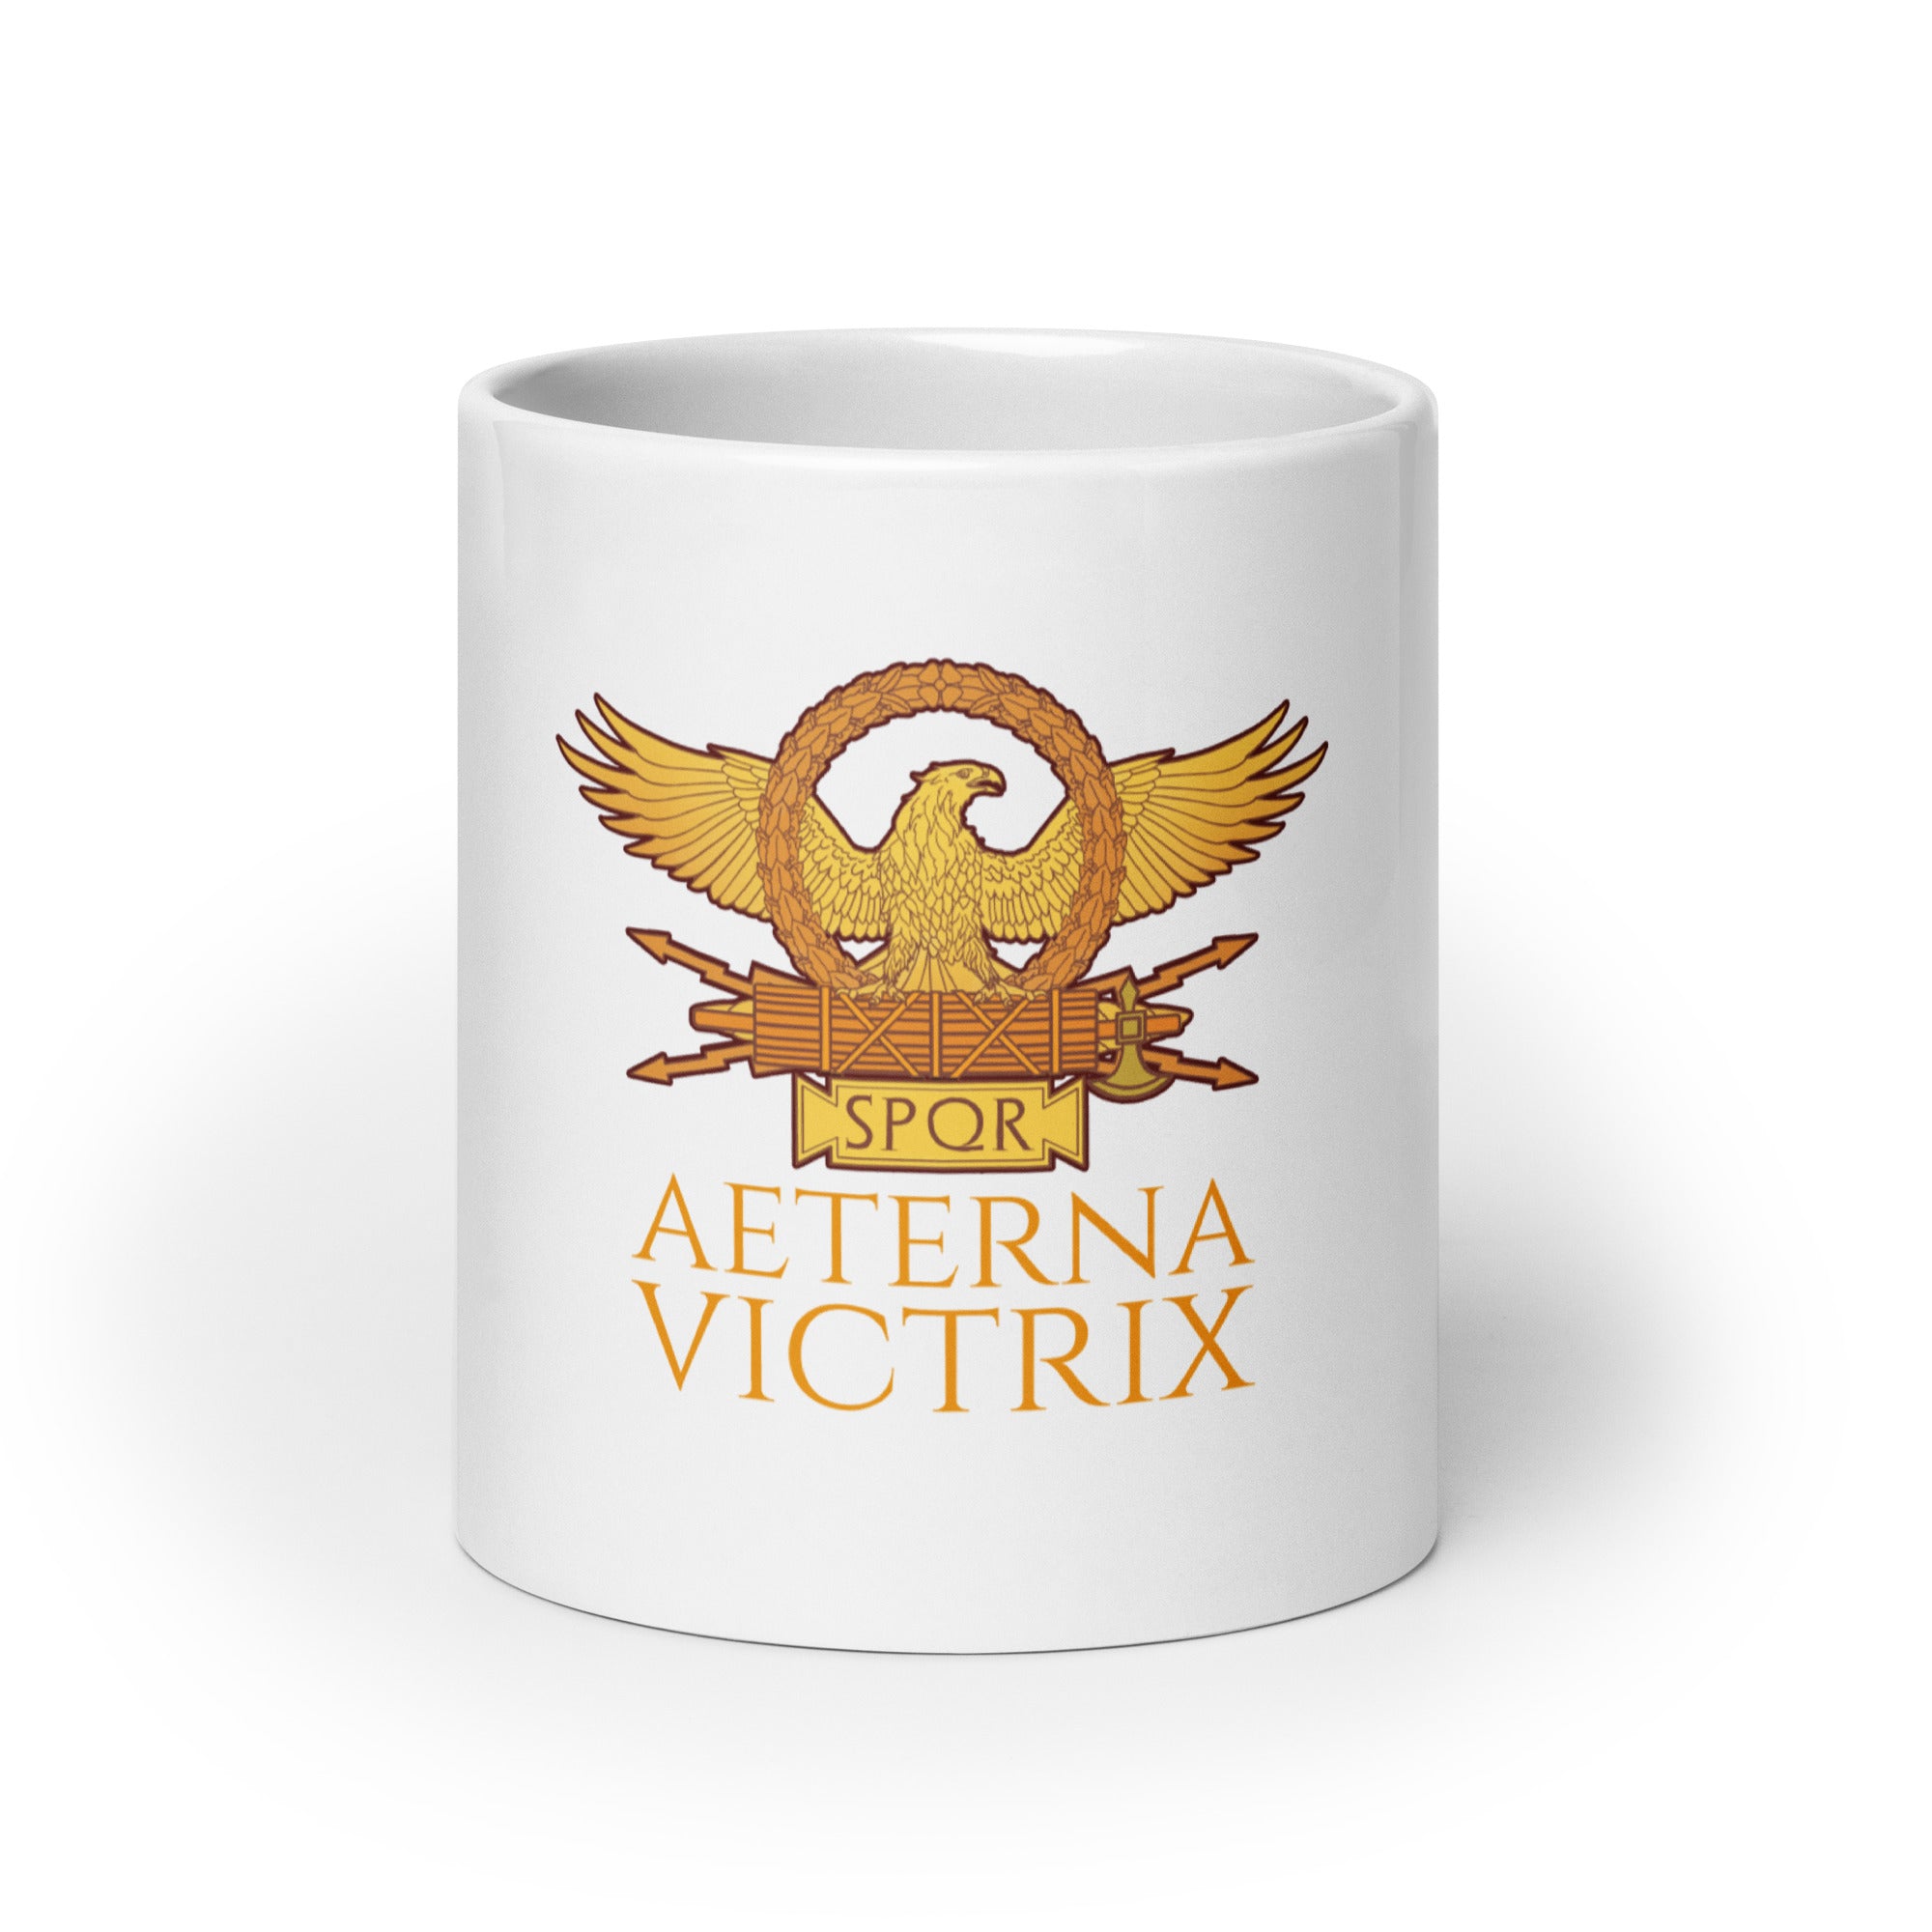 Aeterna Victrix - Eternal Victory - Ancient Rome Coffee Mug